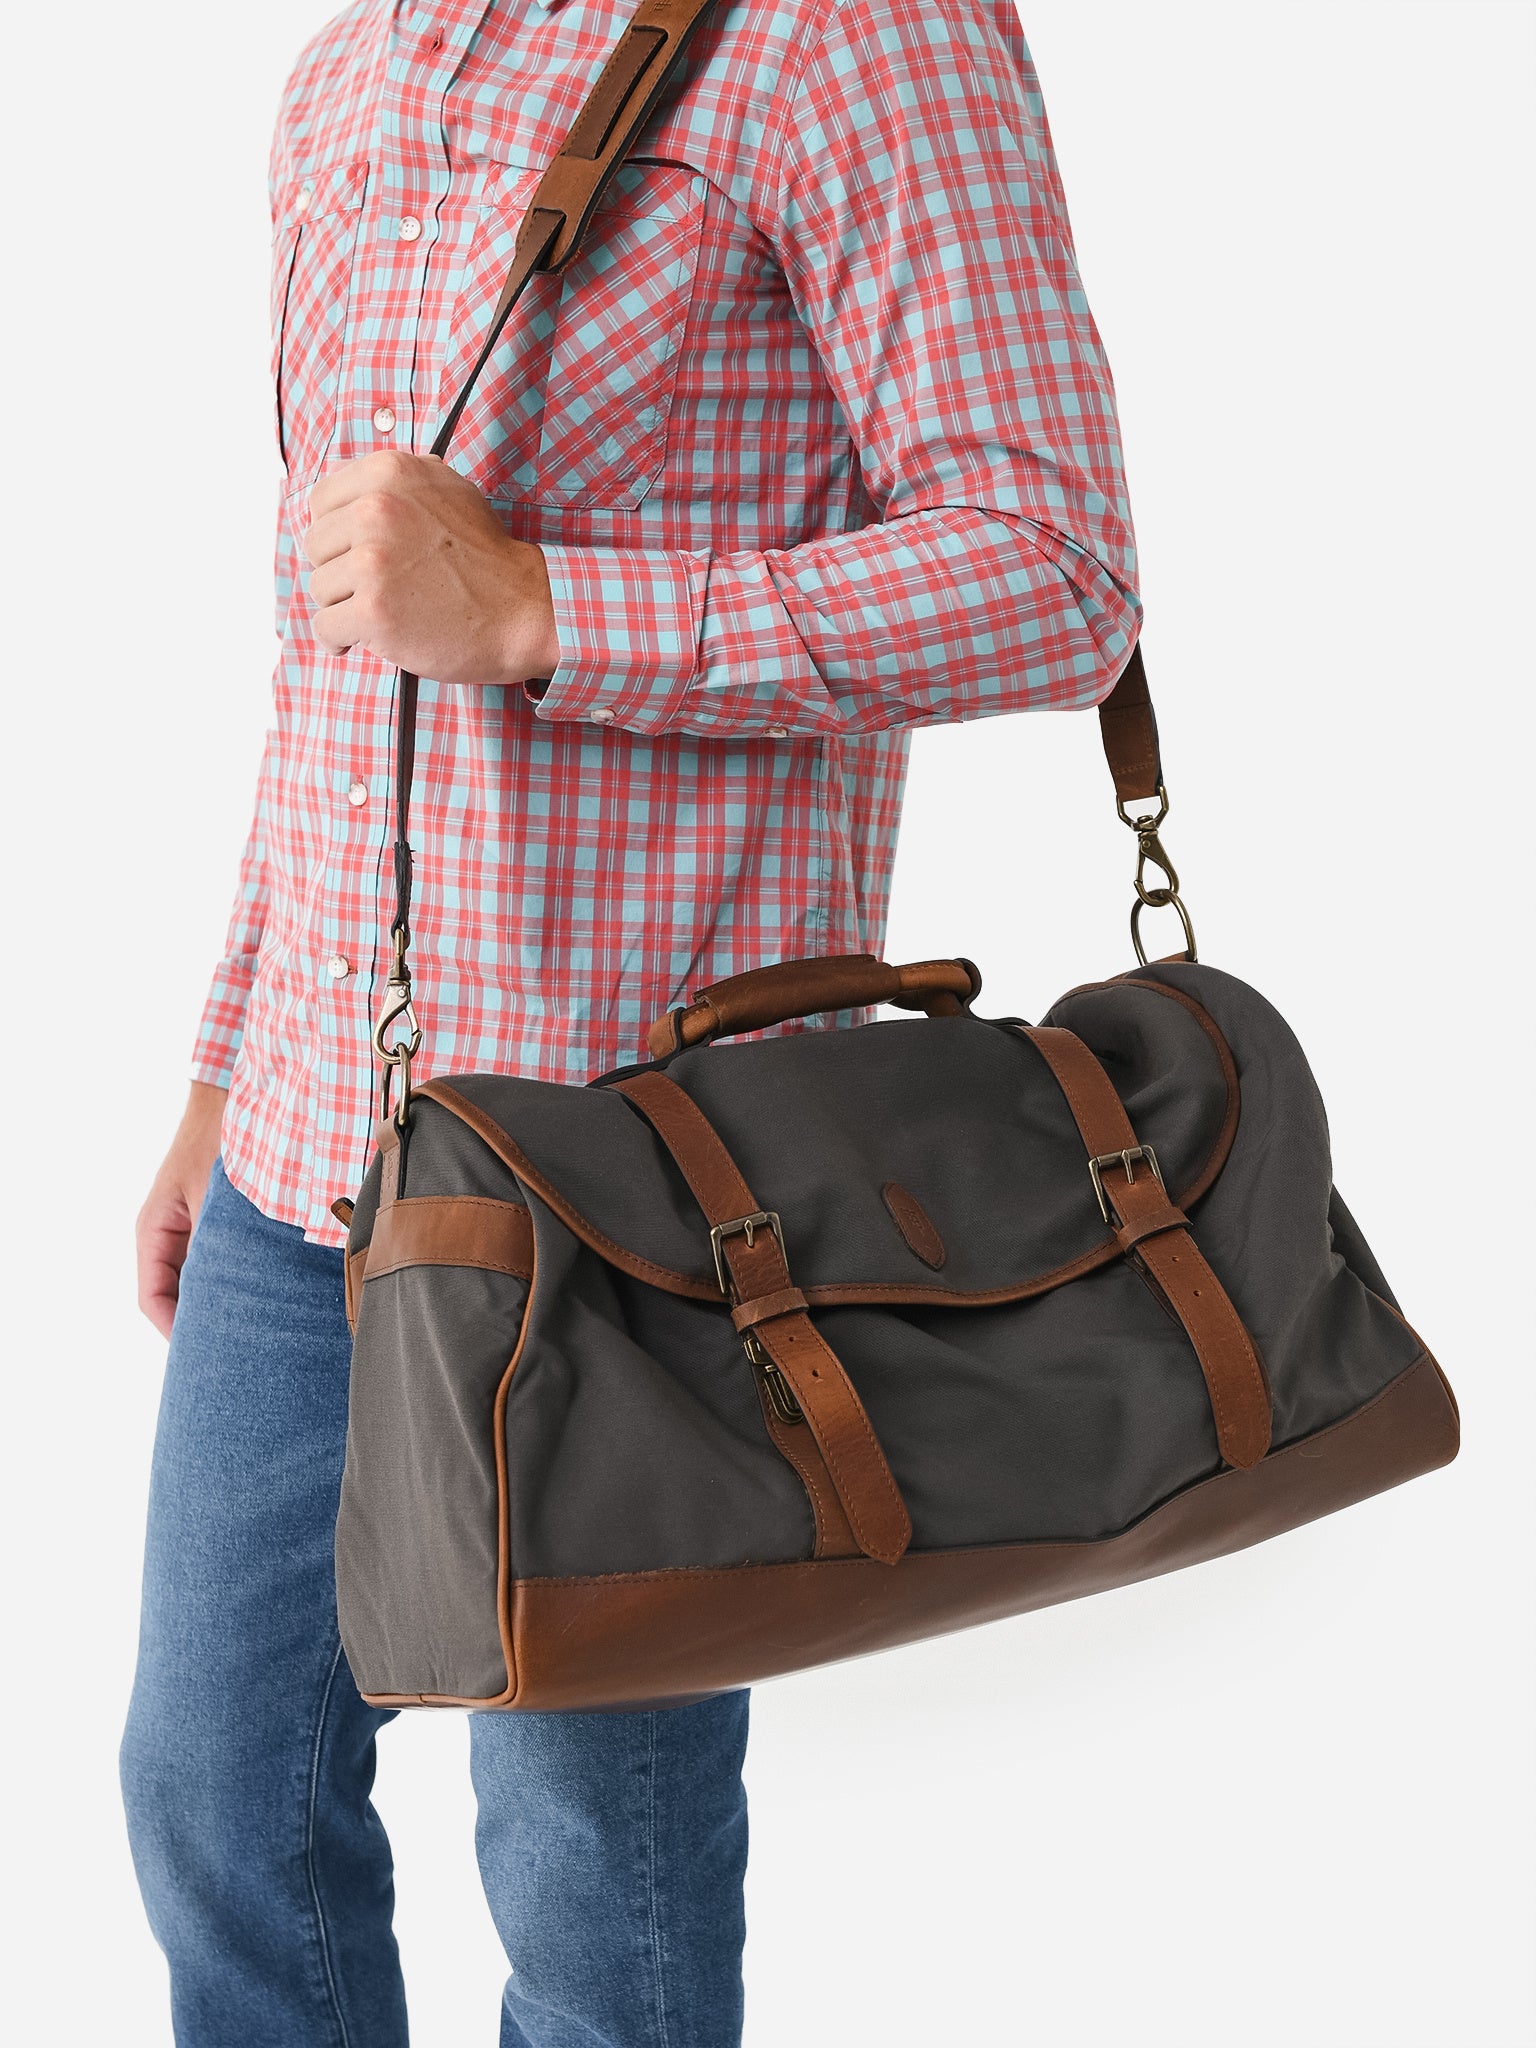 Medium Leather Weekender Bag | Tom Beckbe